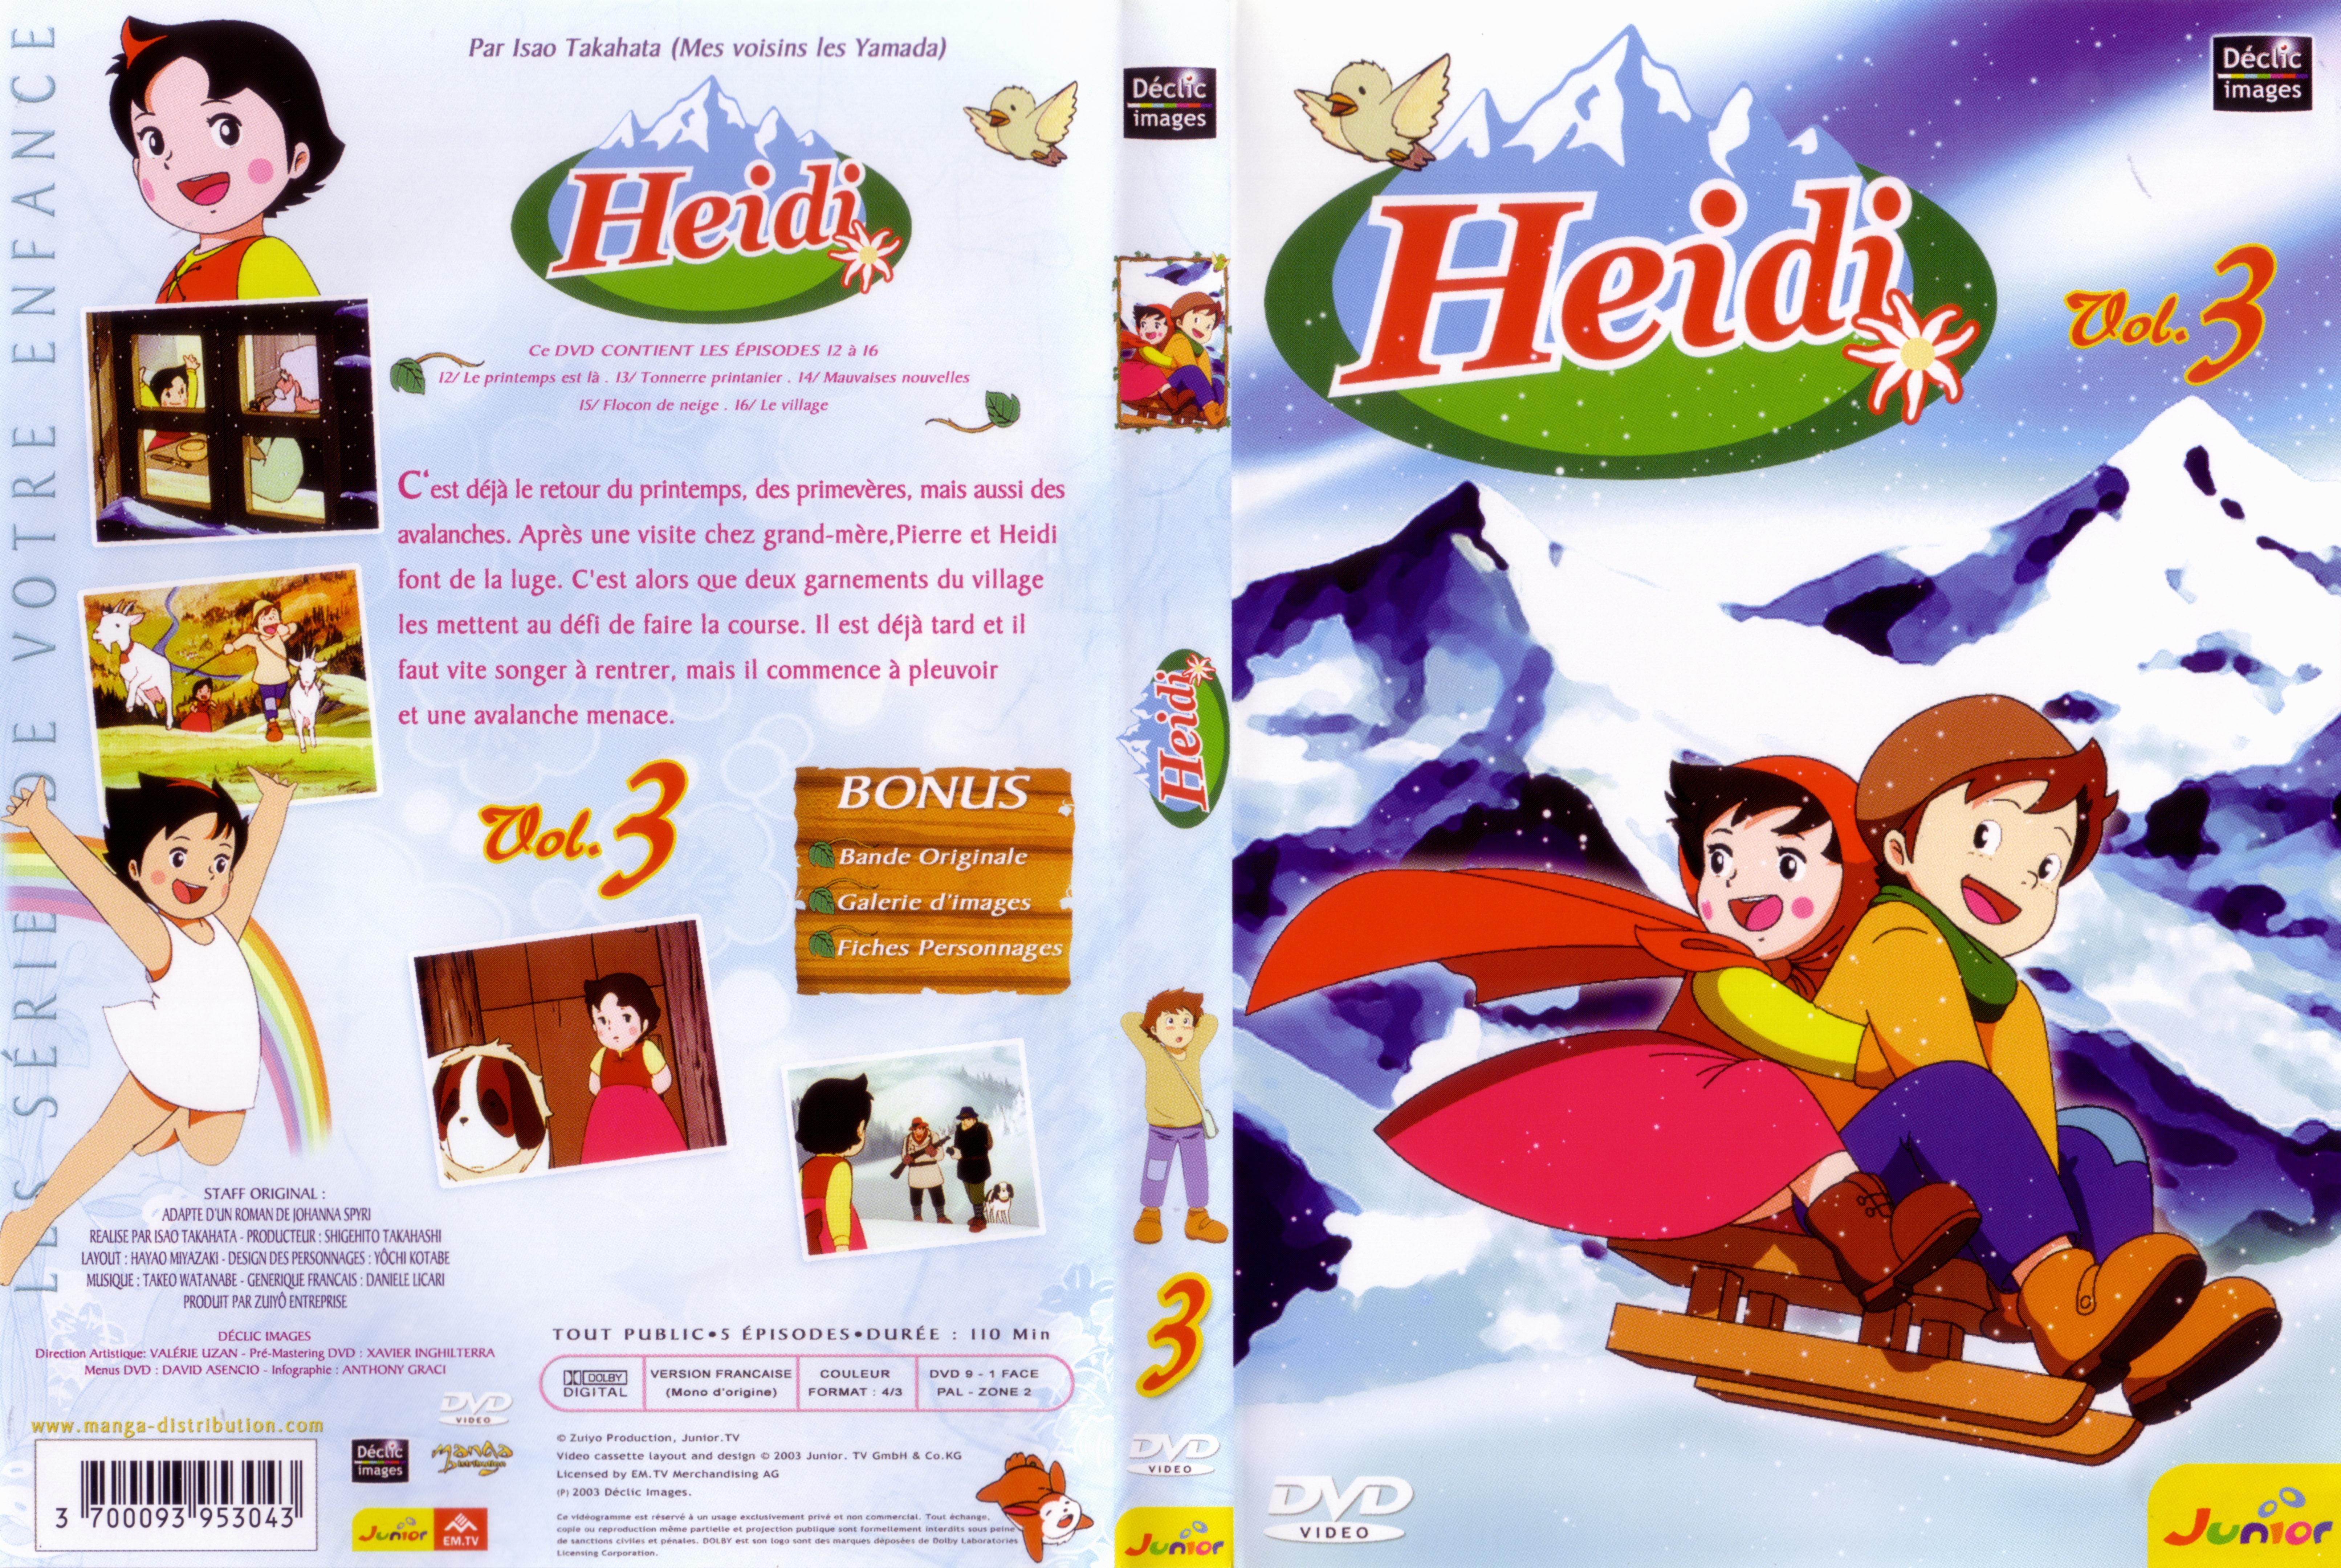 Jaquette DVD Heidi DVD 03